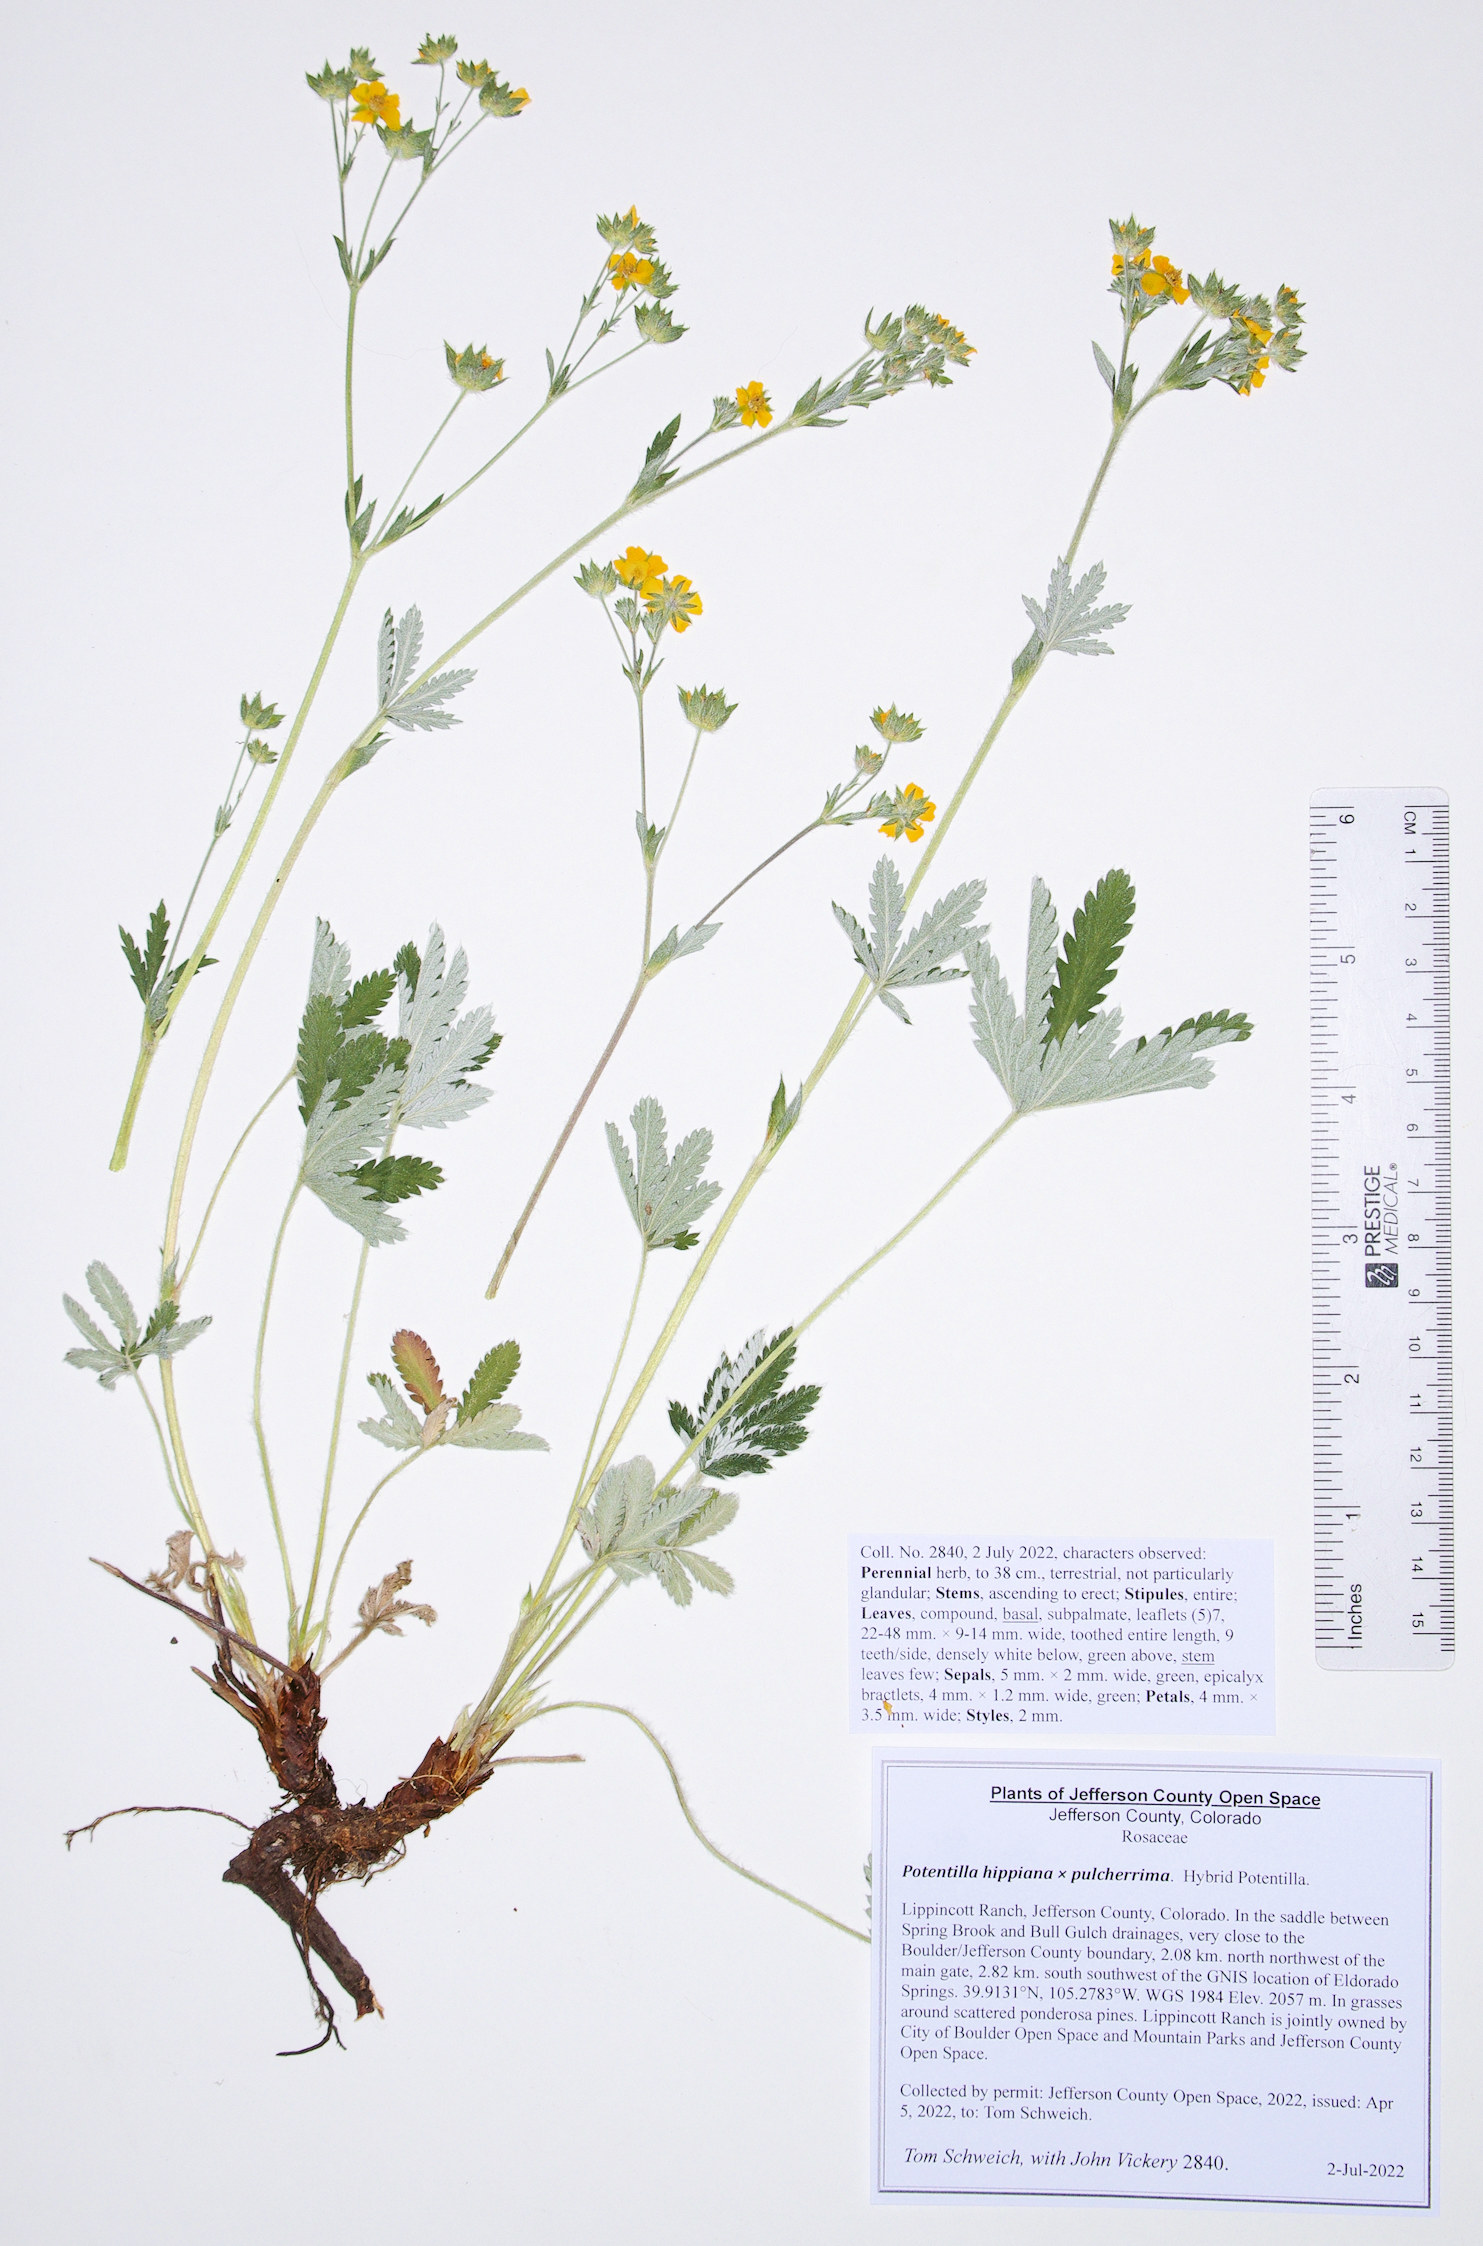 Rosaceae Potentilla hippiana  pulcherrima